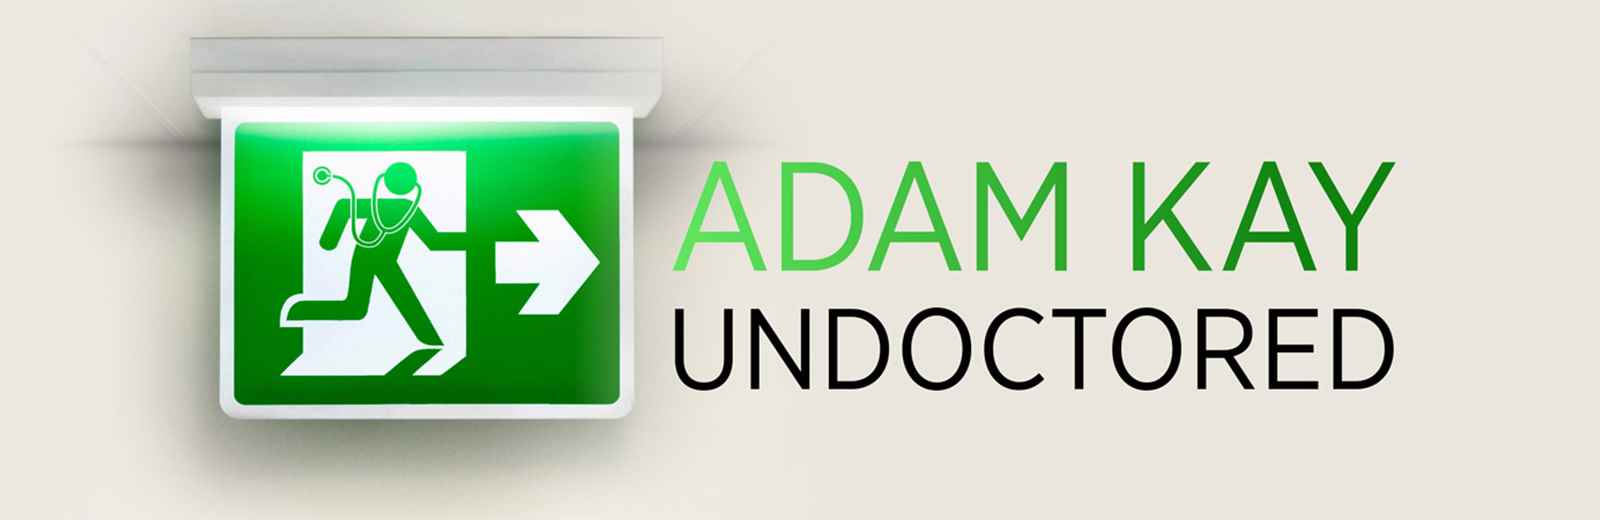 Adam Kay - Undoctored